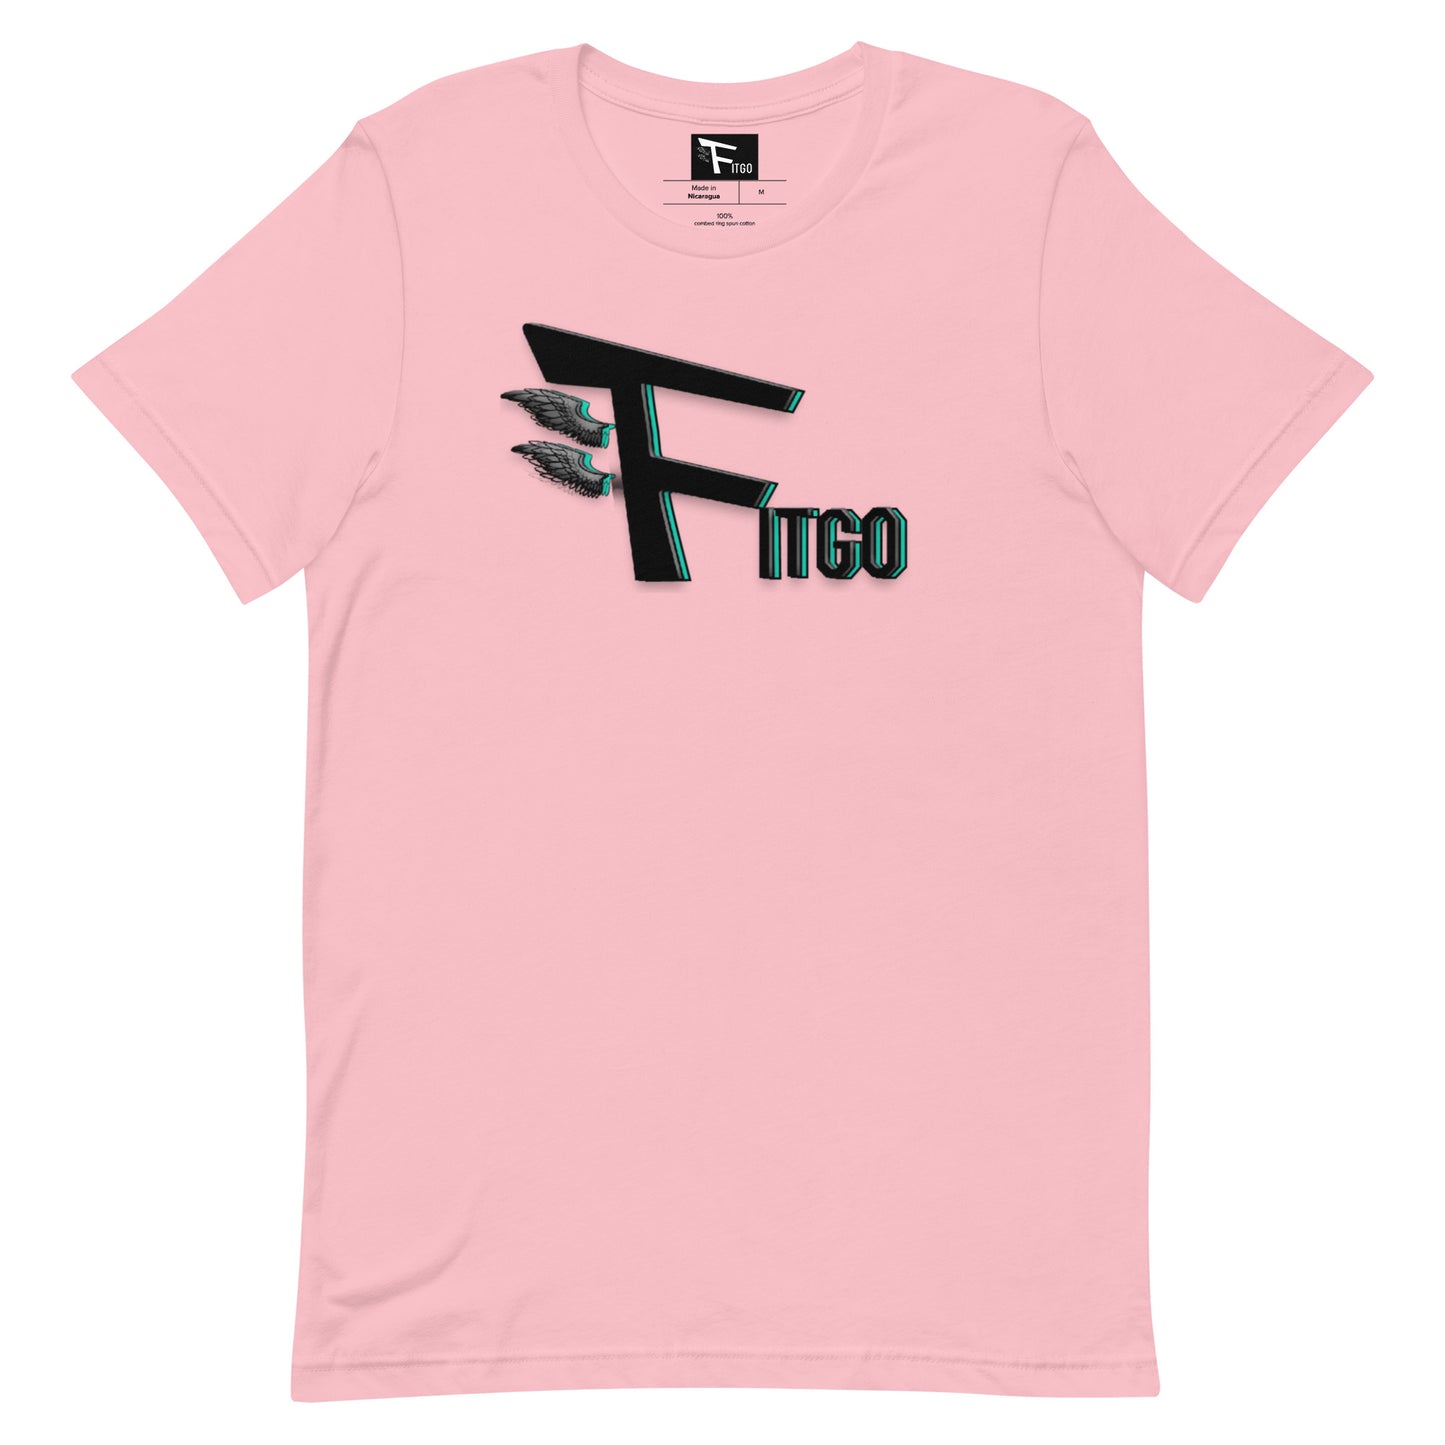 Men's Fitgo Embossed T-Shirt